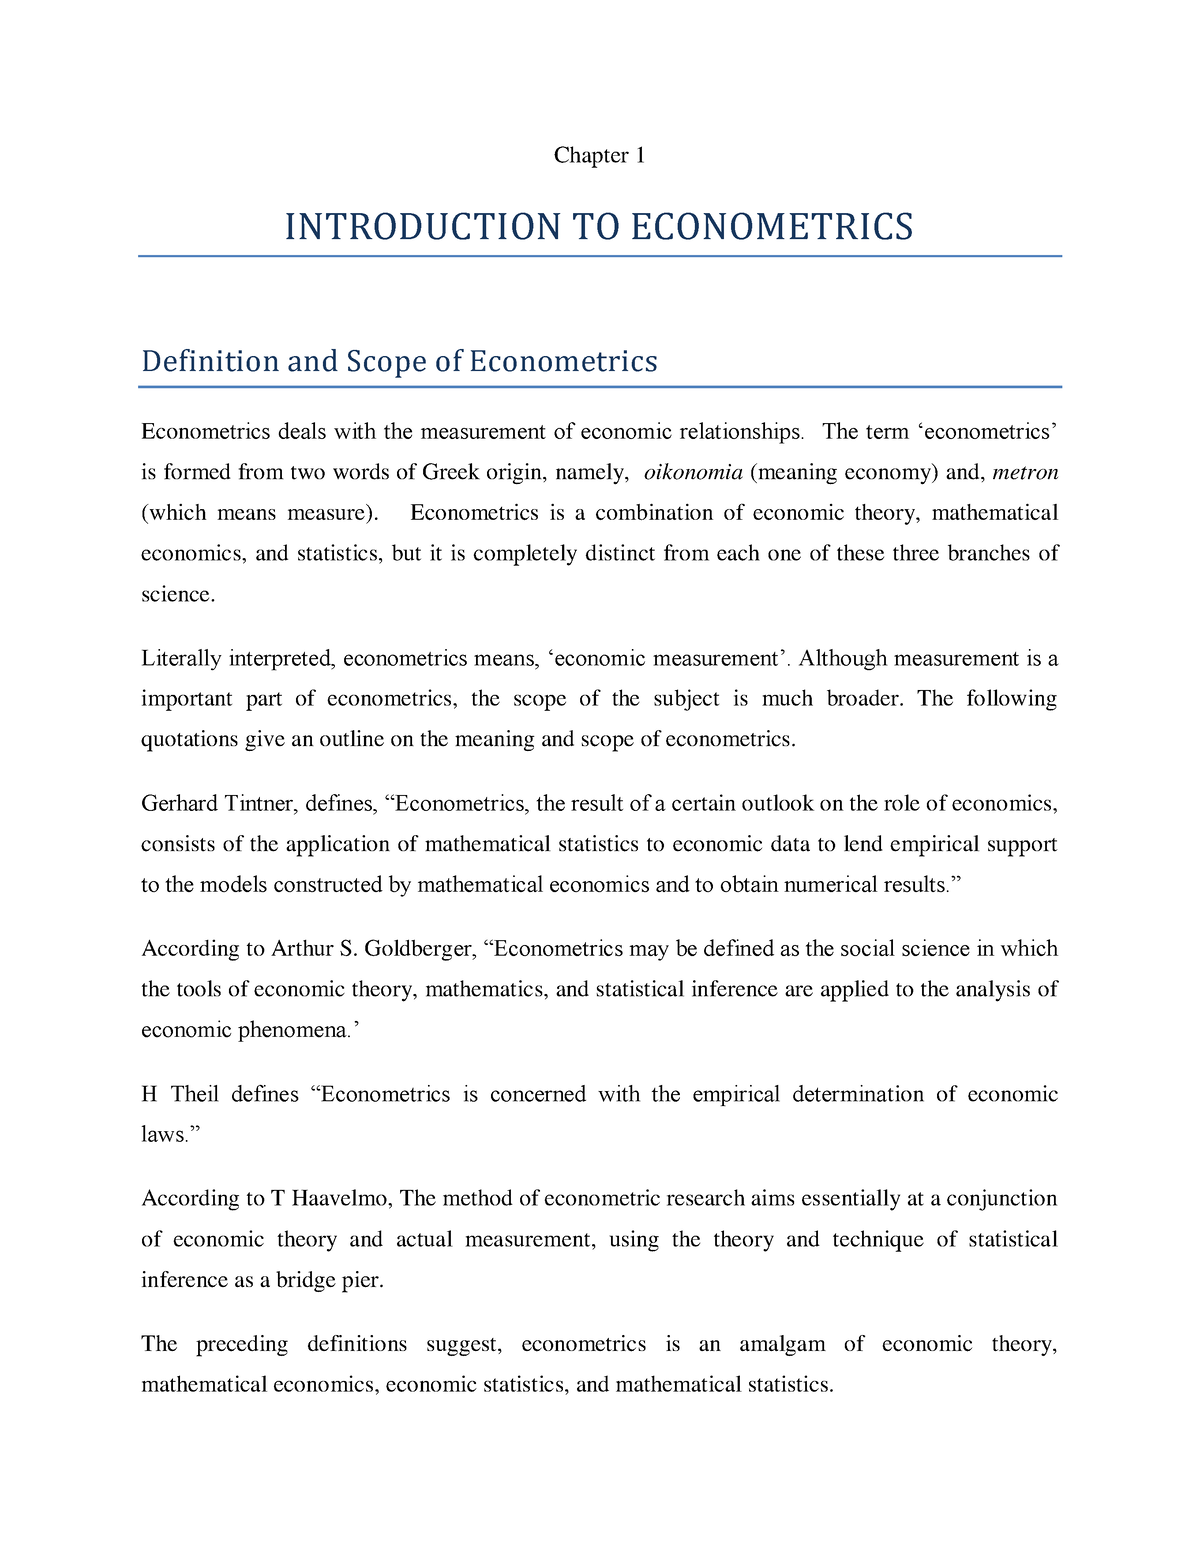 econometrics research paper